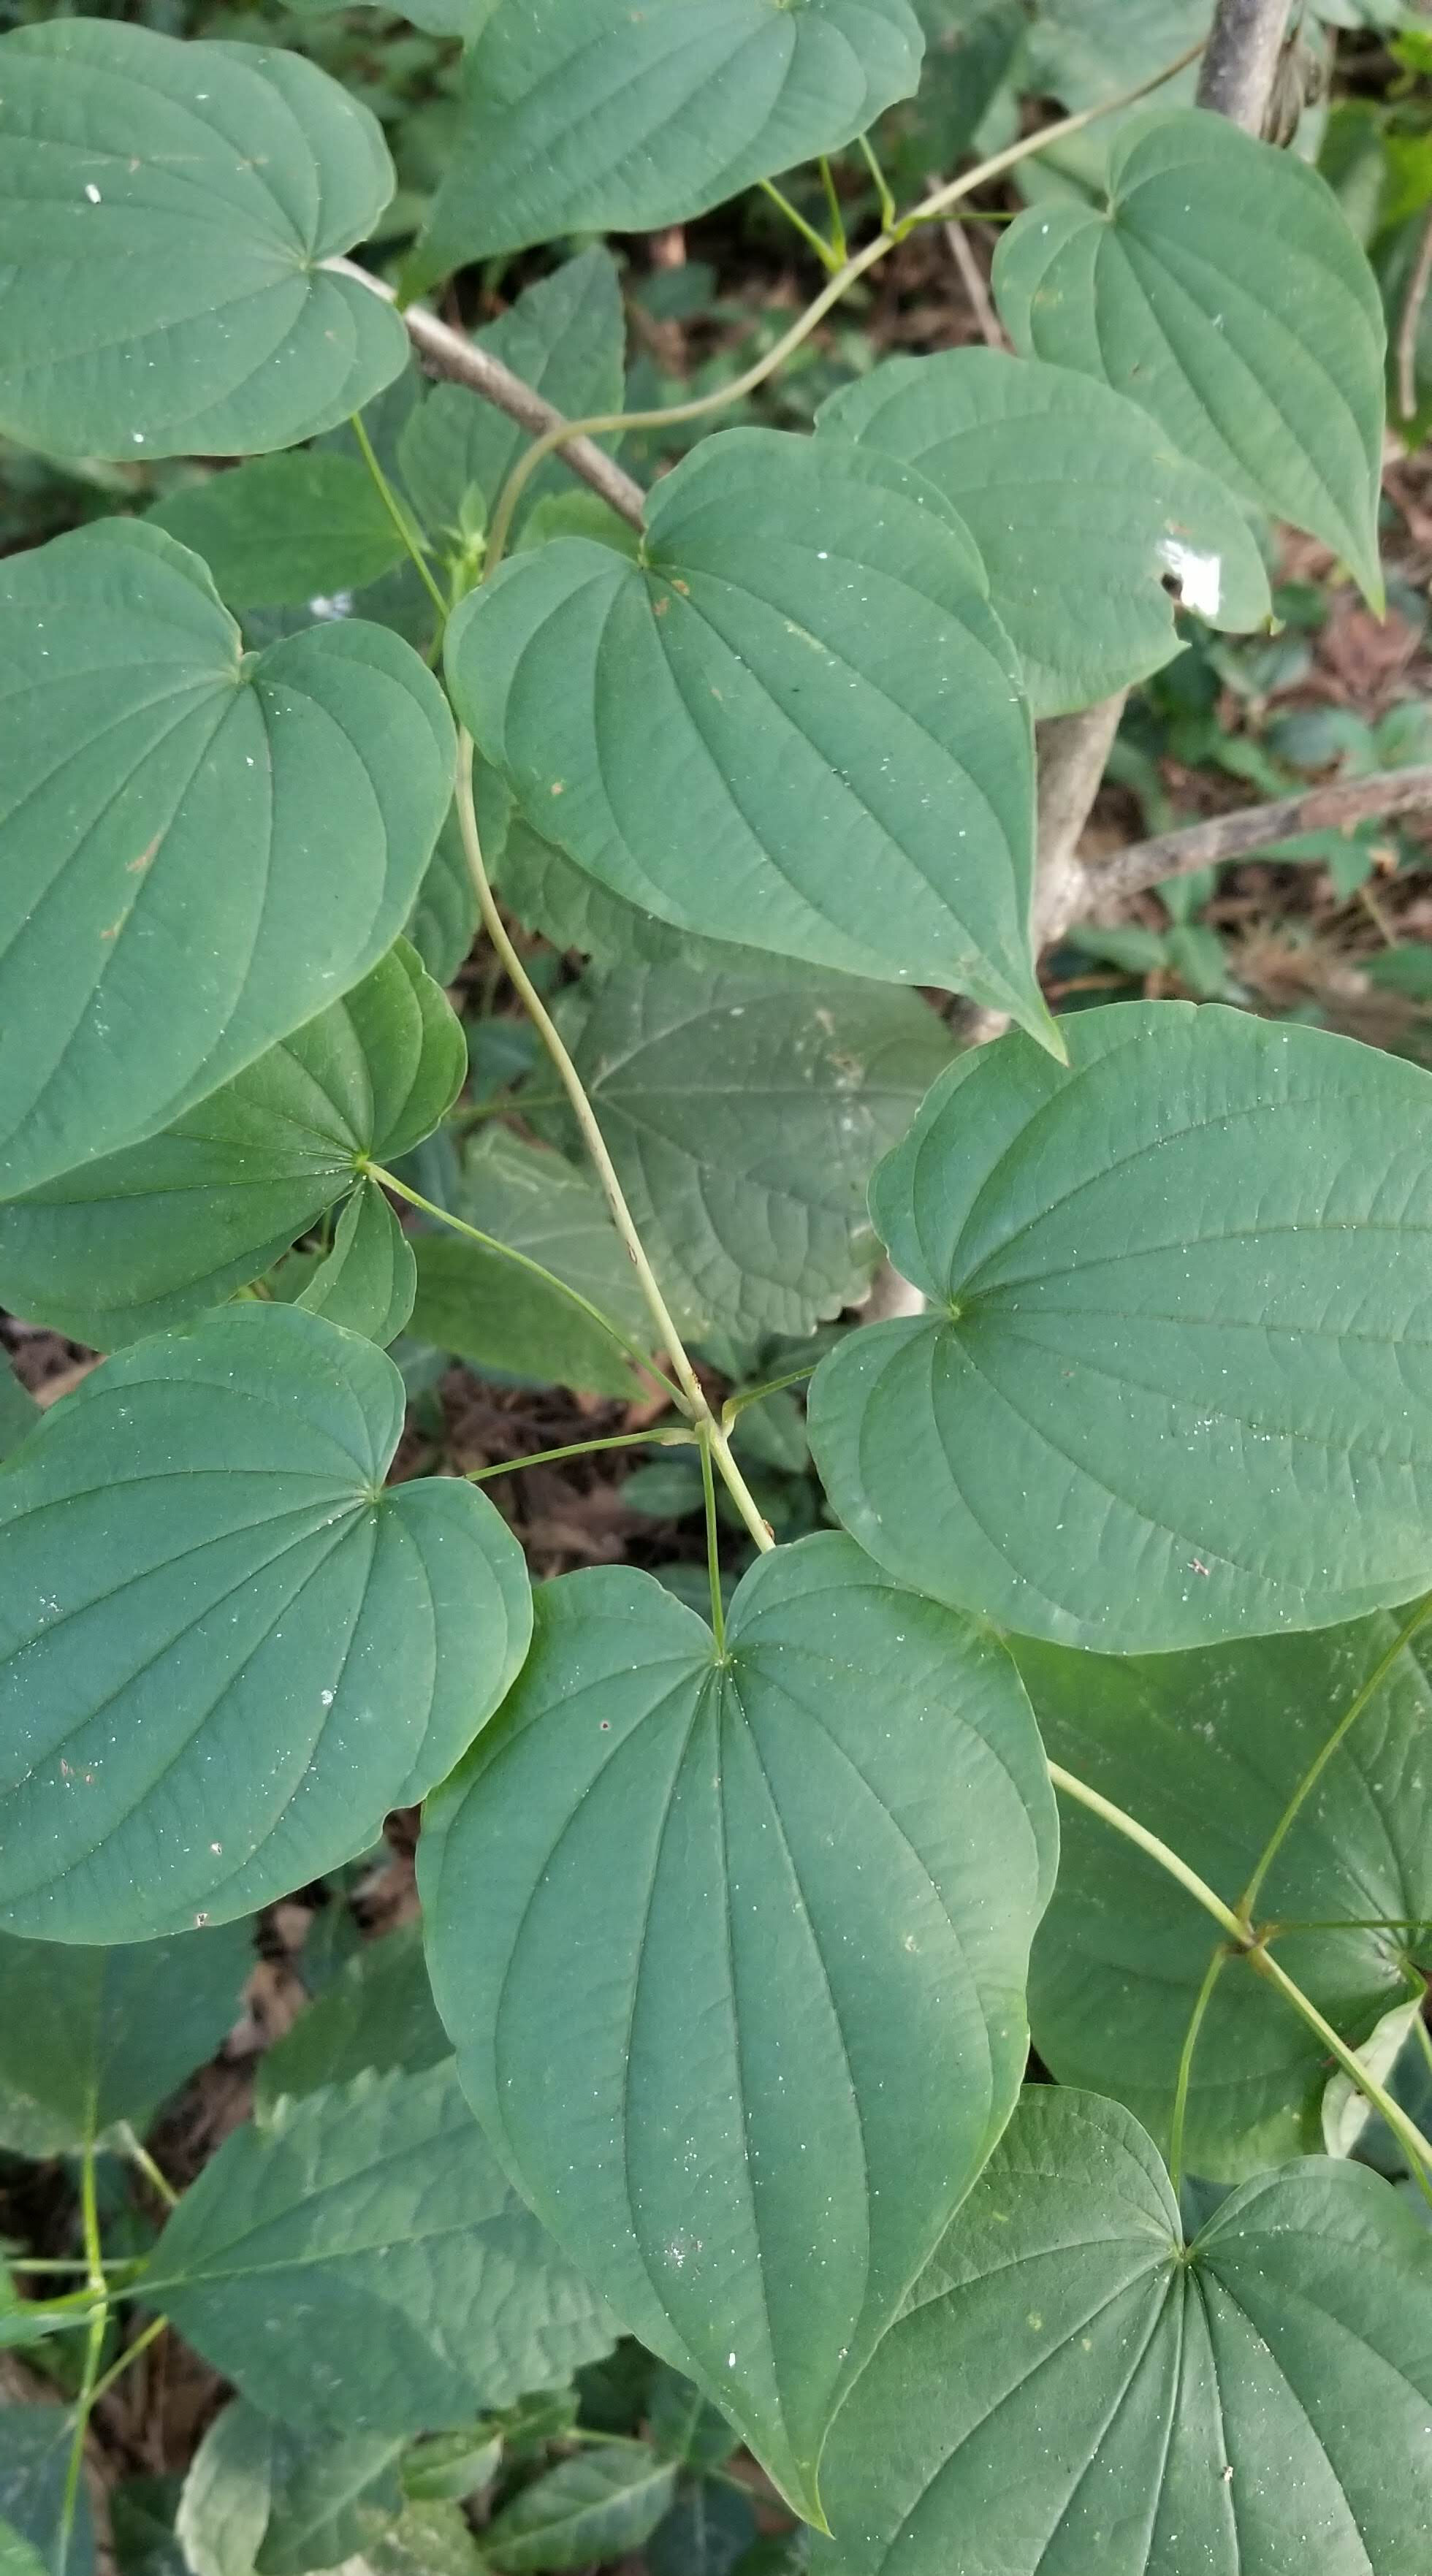 Native look-a-like, wild yam leaves